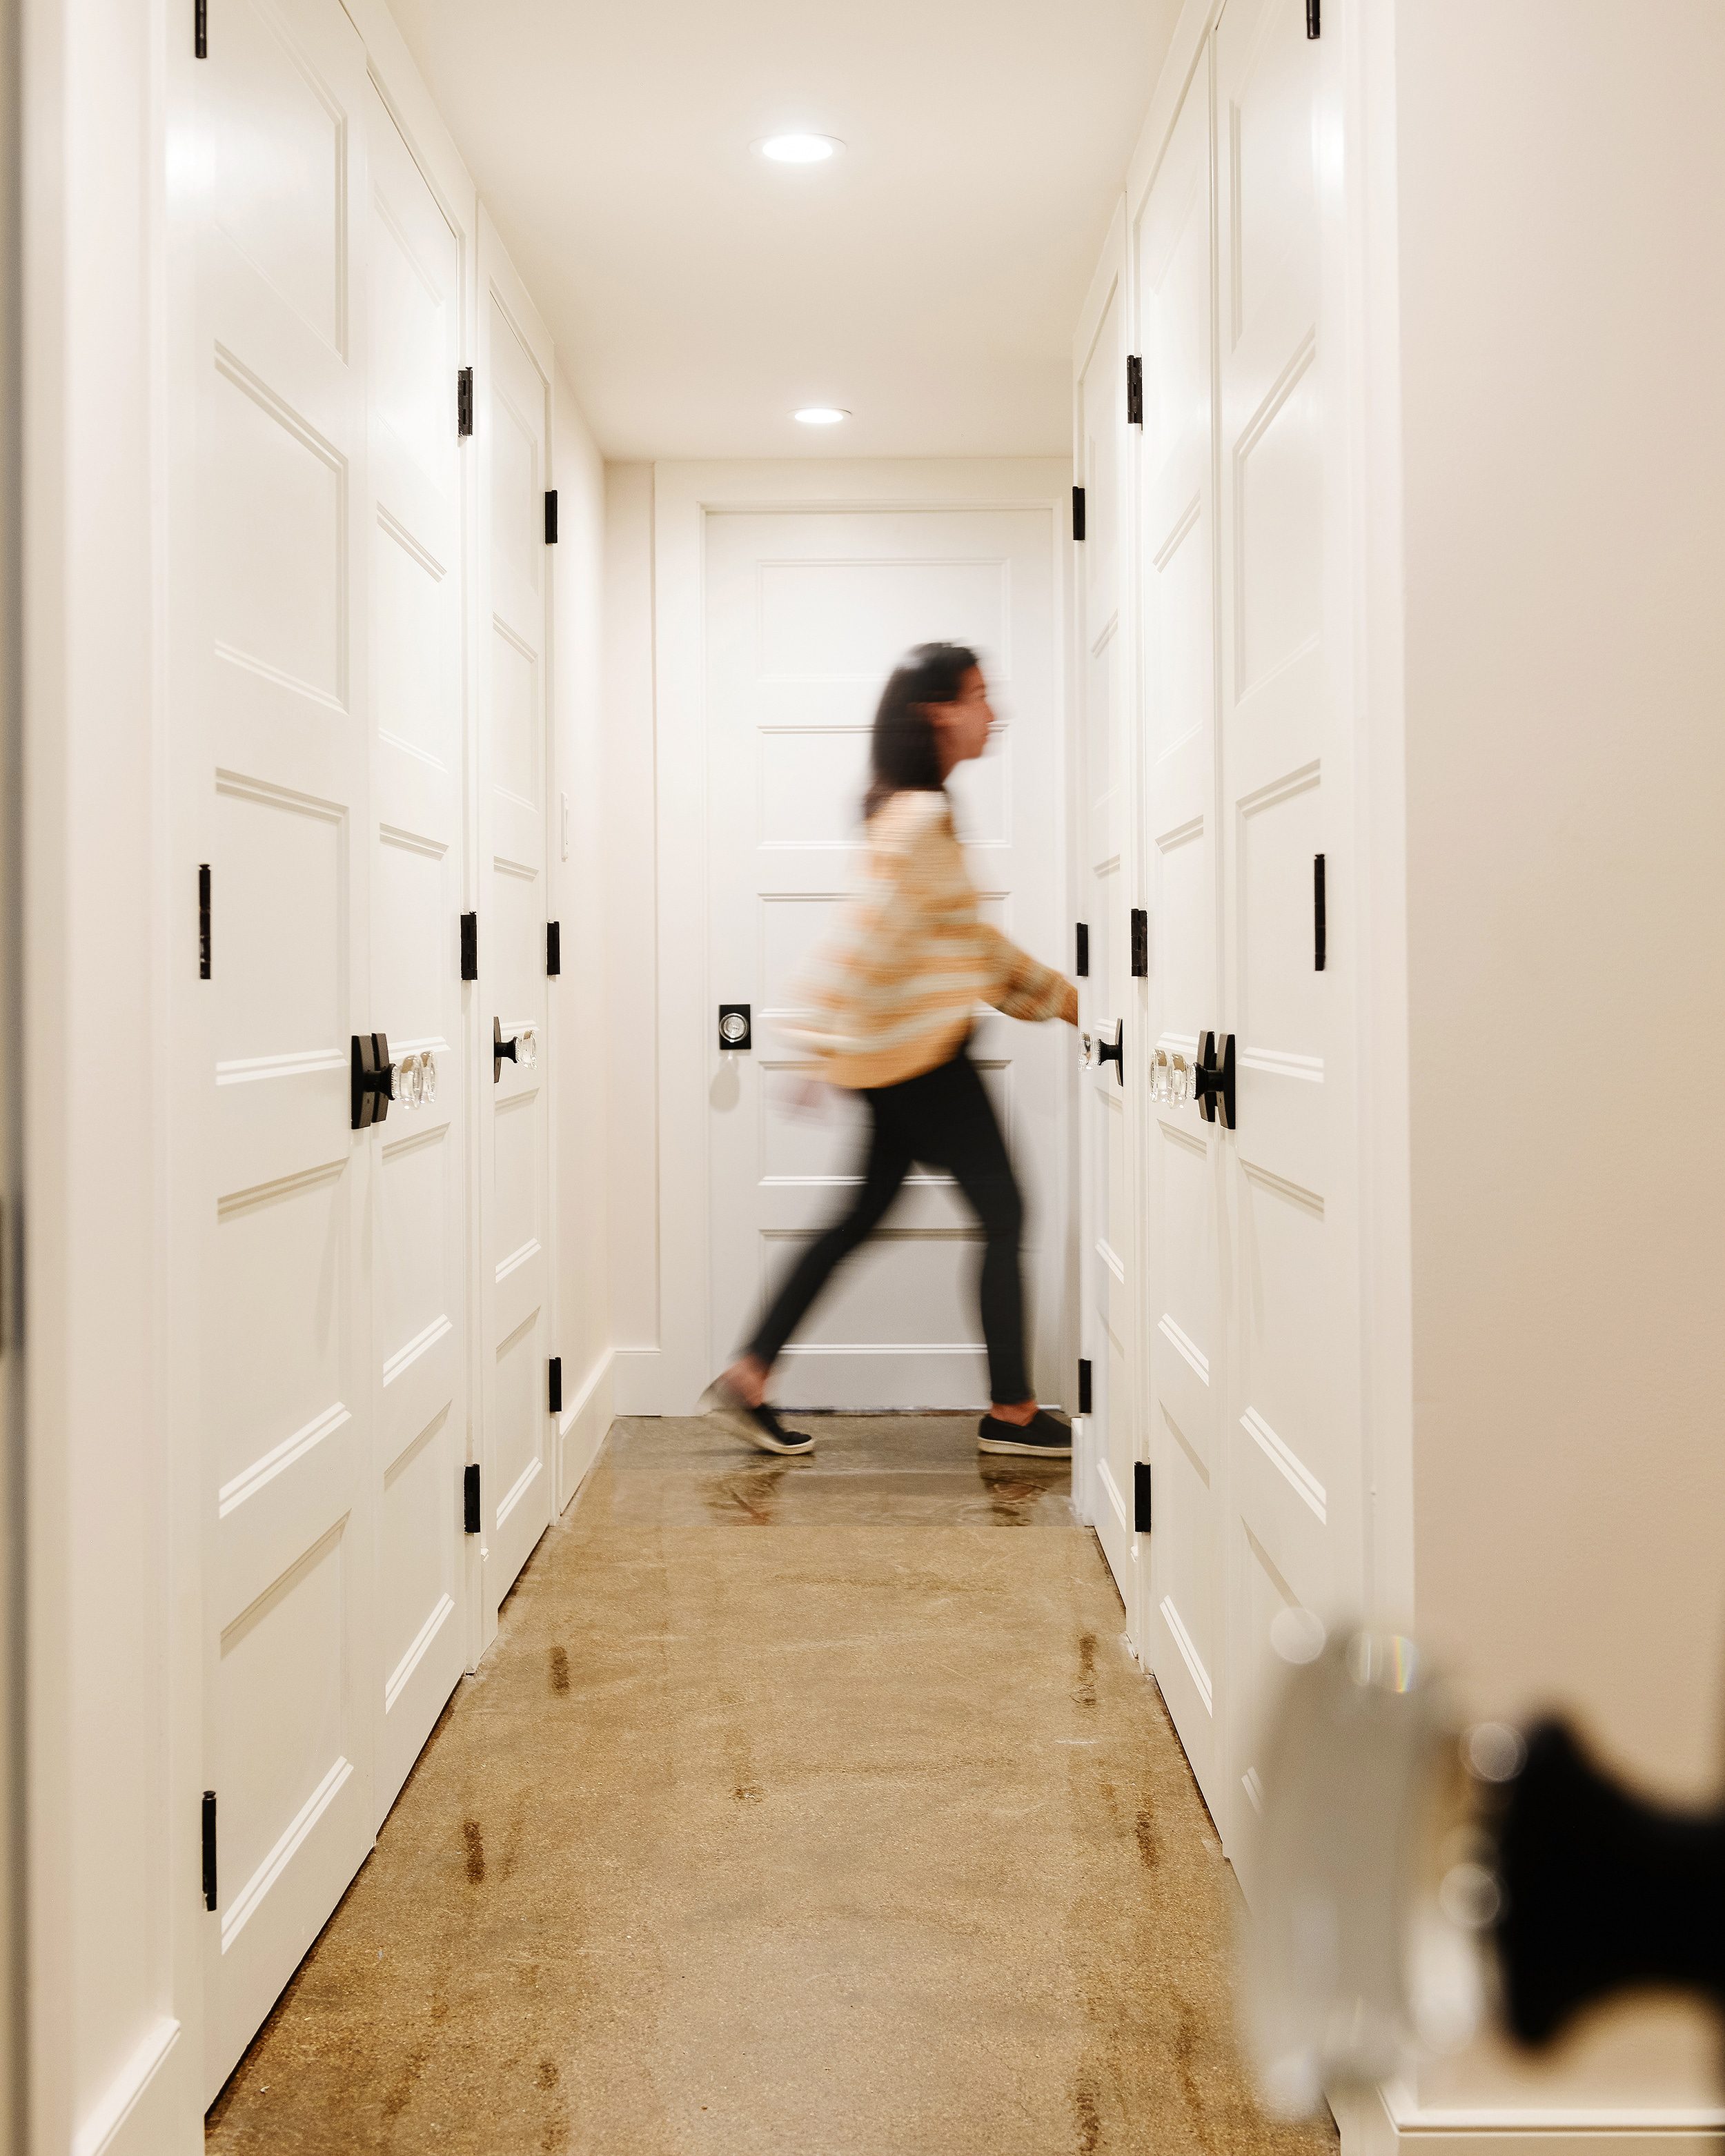 Schlage custom hobson glass knob detail, Kim walking down a hallway with all new door hardware | via Yellow Brick Home